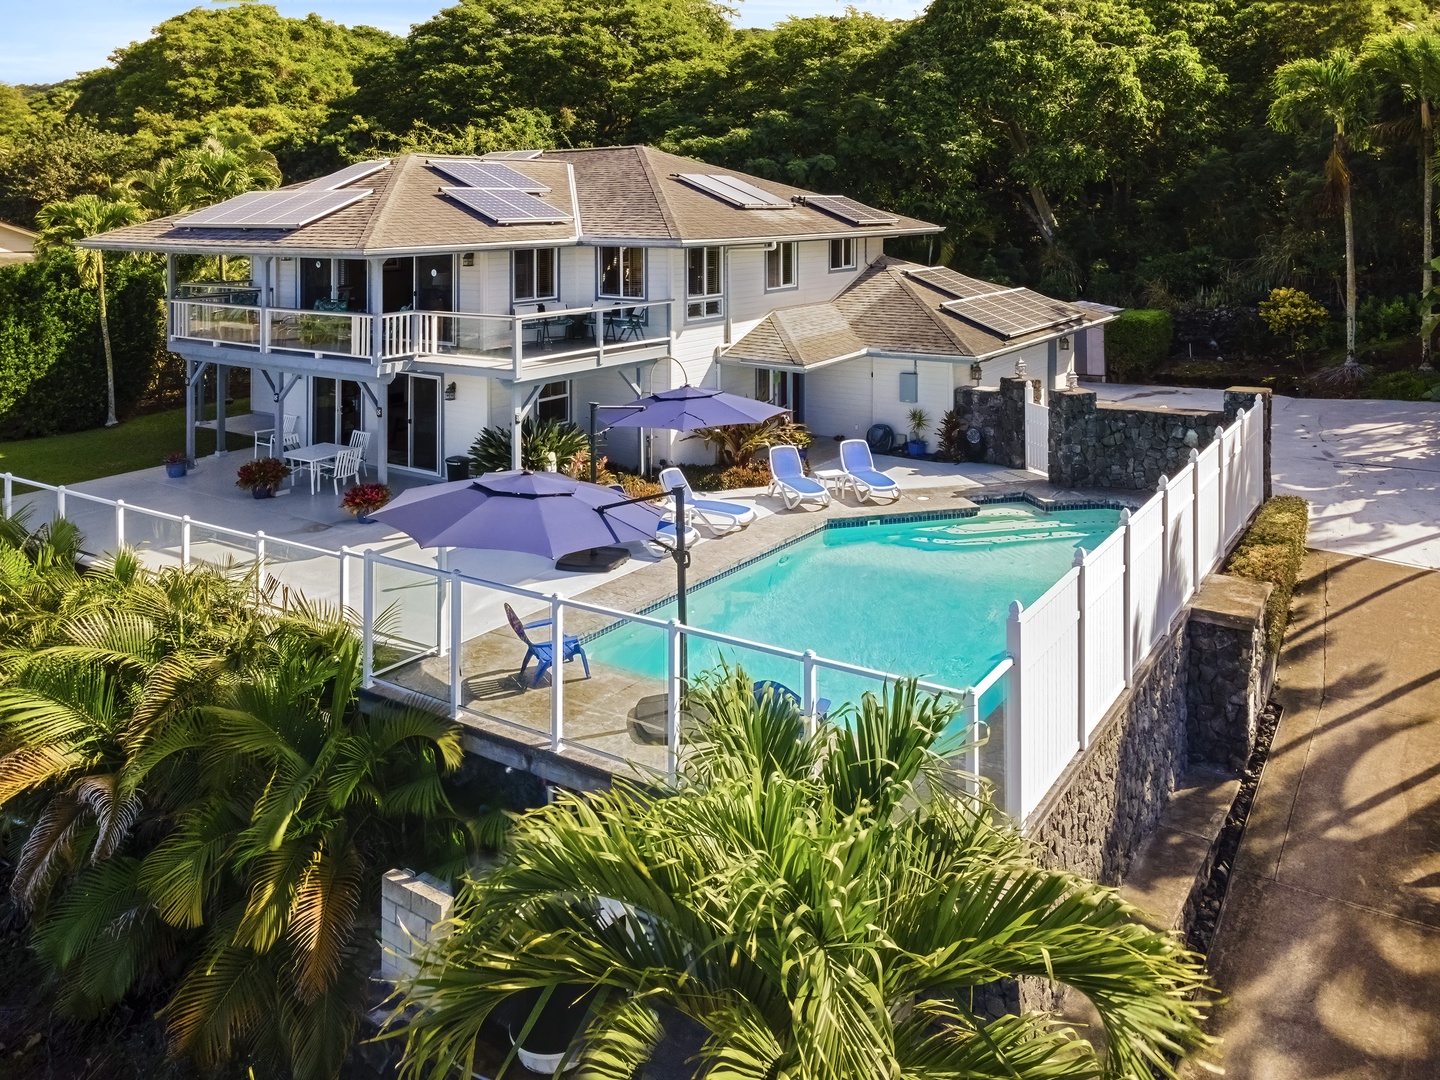 Kailua Kona Vacation Rentals, Honu O Kai (Turtle of the Sea) - Surrounded by lush foliage